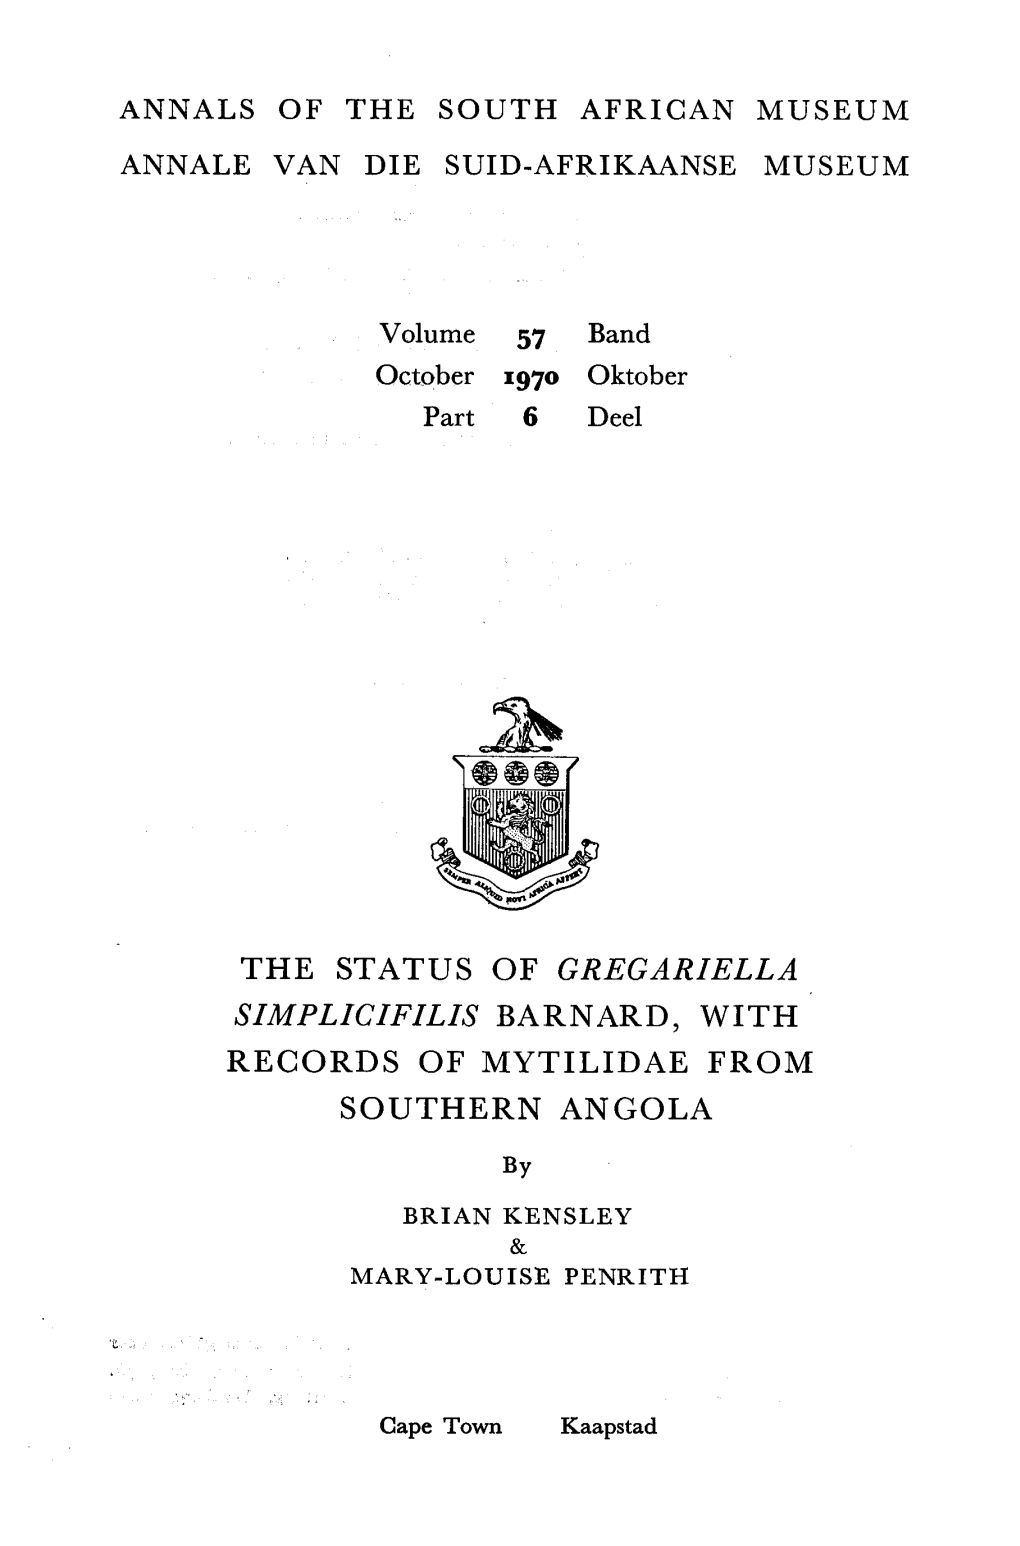 The Status of Gregariella Simplicifilis Barnard, with Records of Mytilidae from Southern Angola